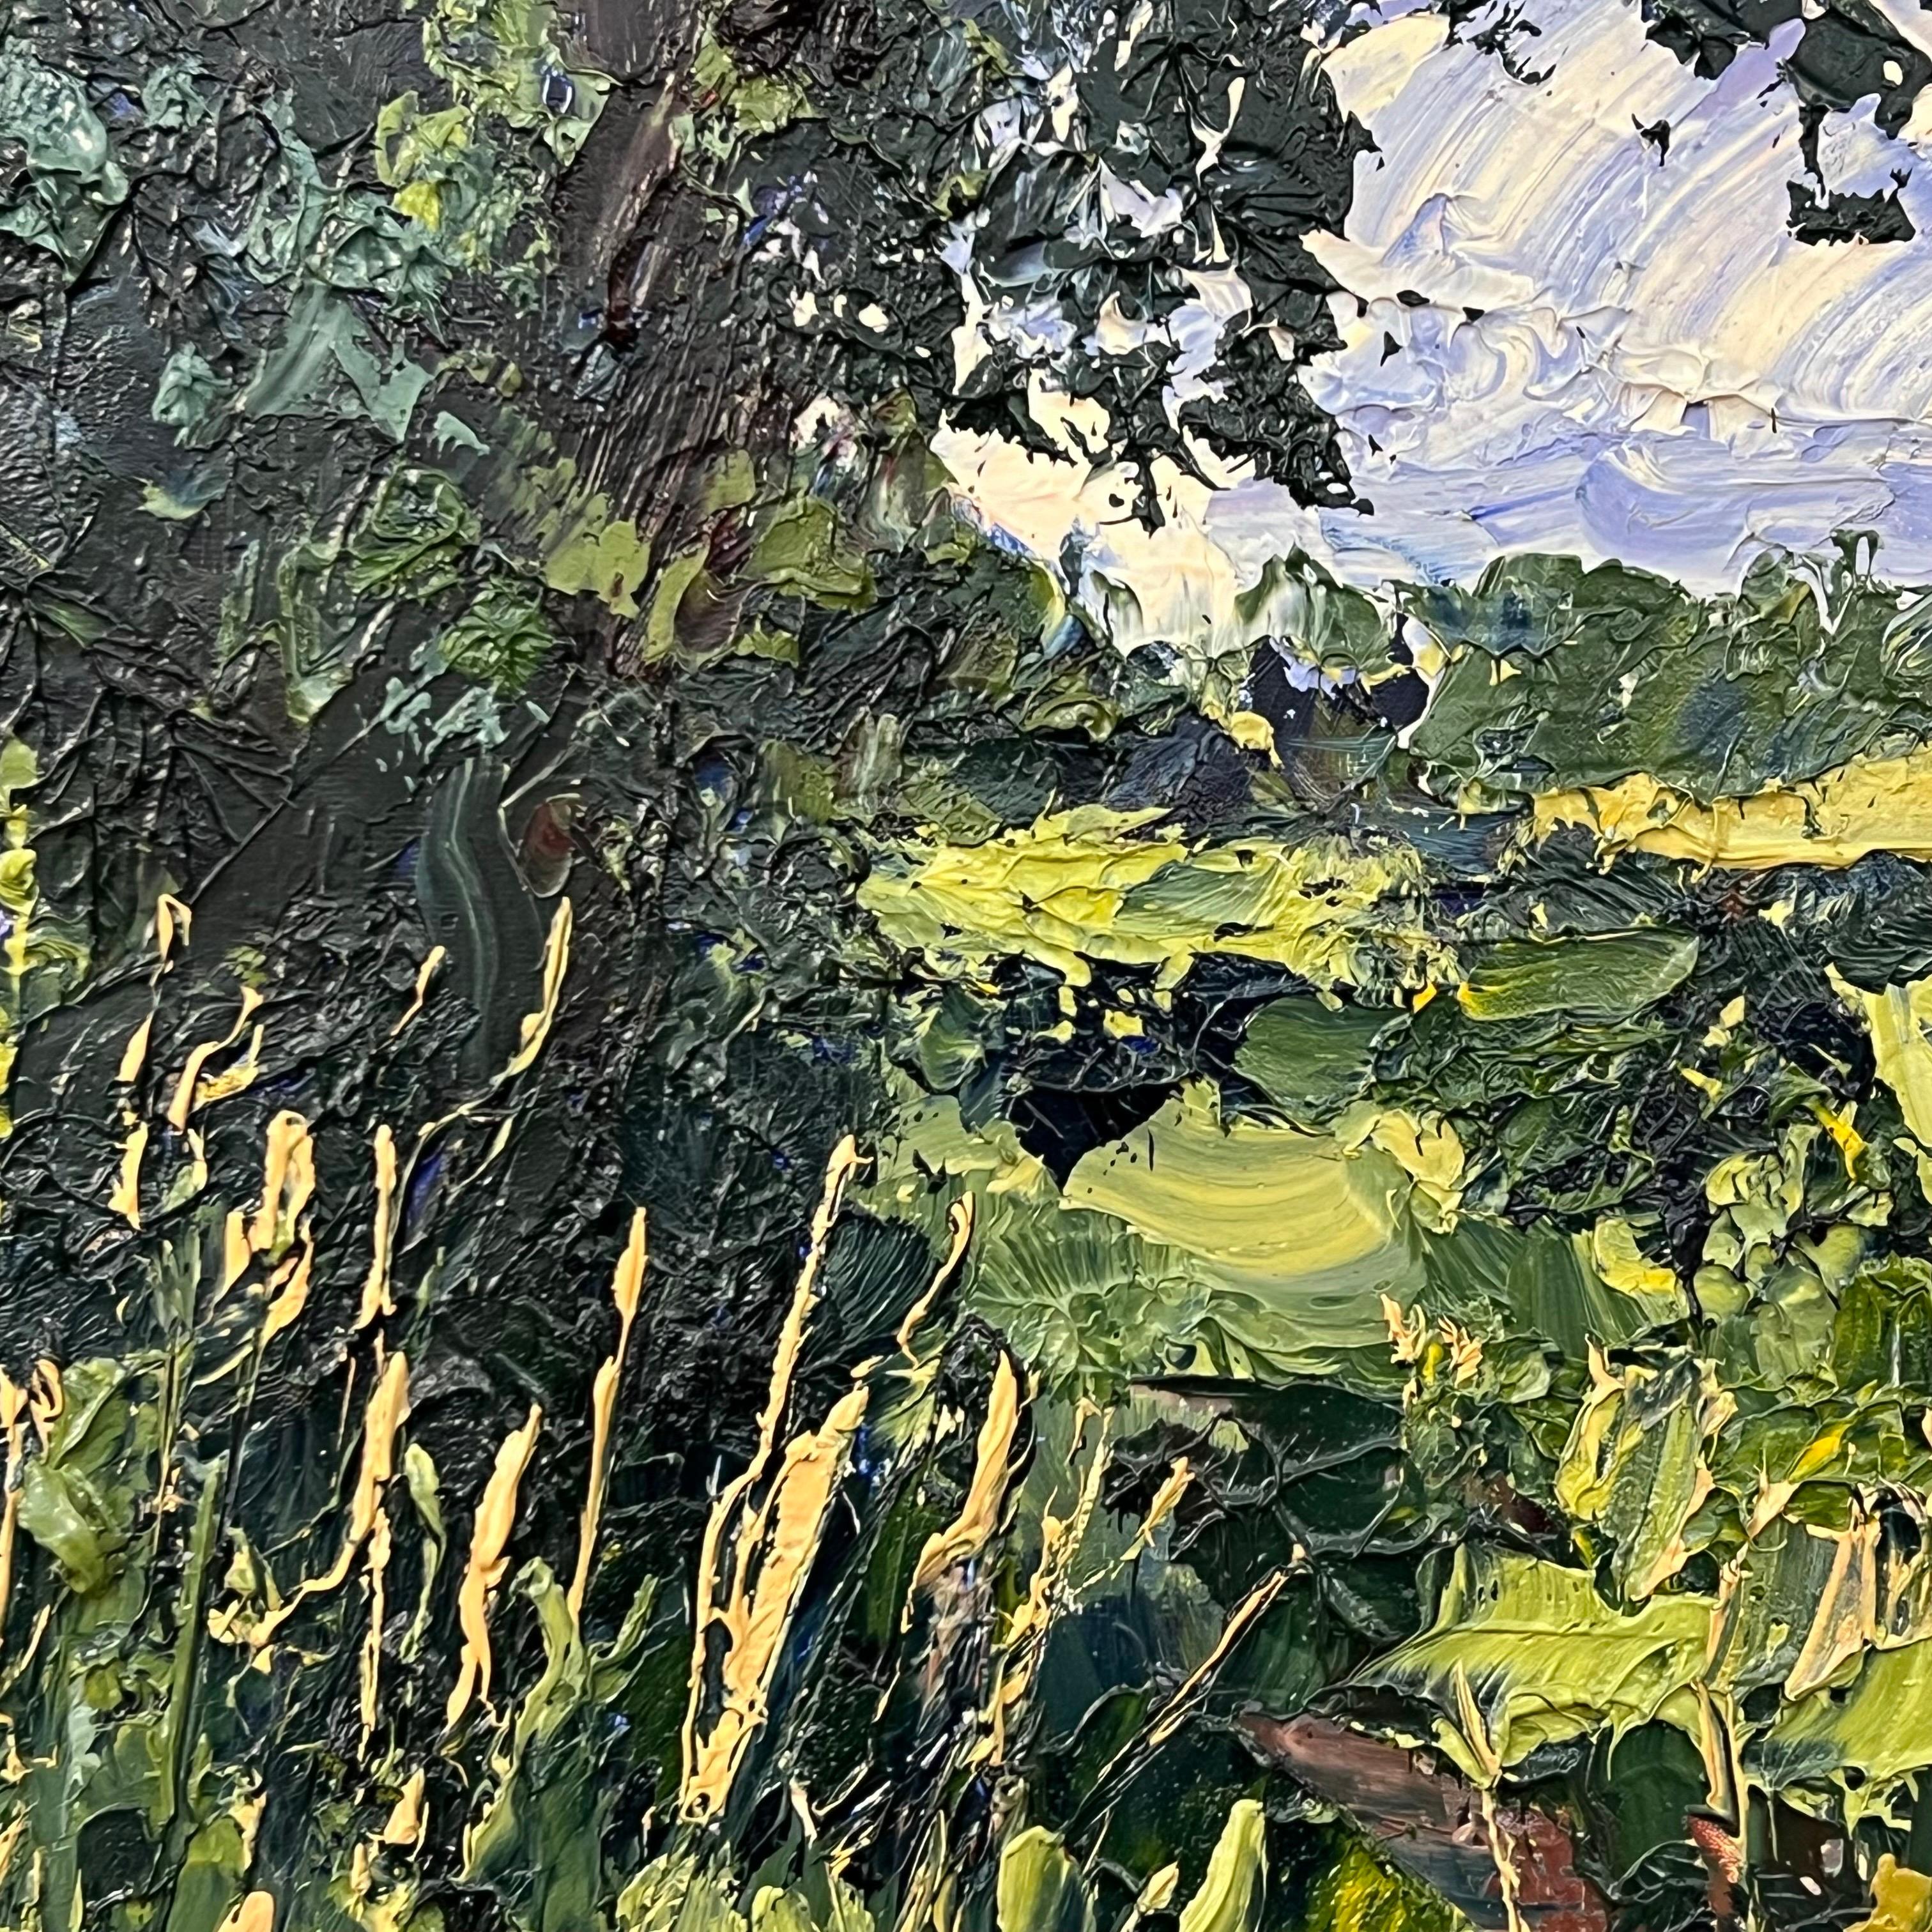 English Summer Impasto Landscape Oil Painting by British En Plein Air Artist For Sale 5